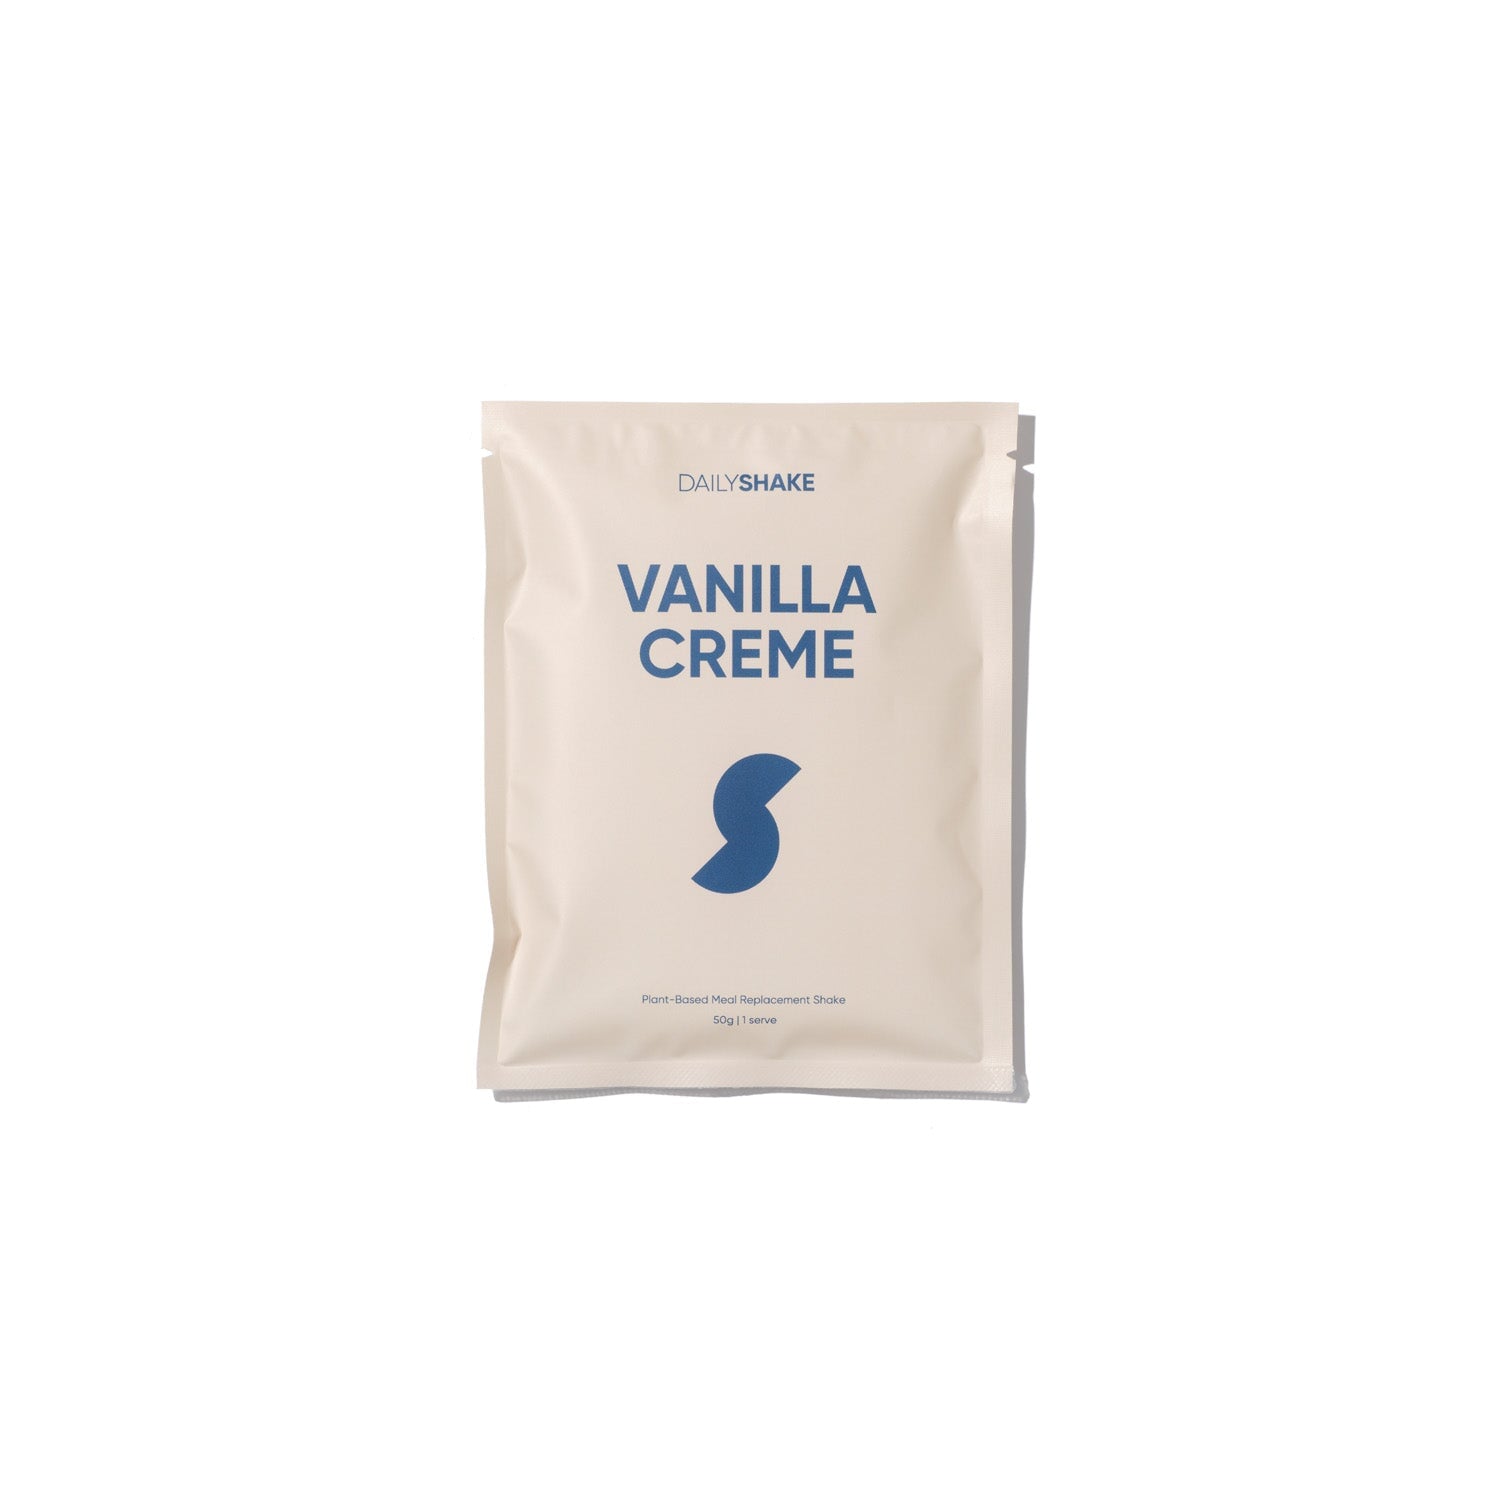 Vanilla Creme Daily Shake - Premium Meal Replacement Shakes 10 x Vanilla Creme Single Serve Sachets 